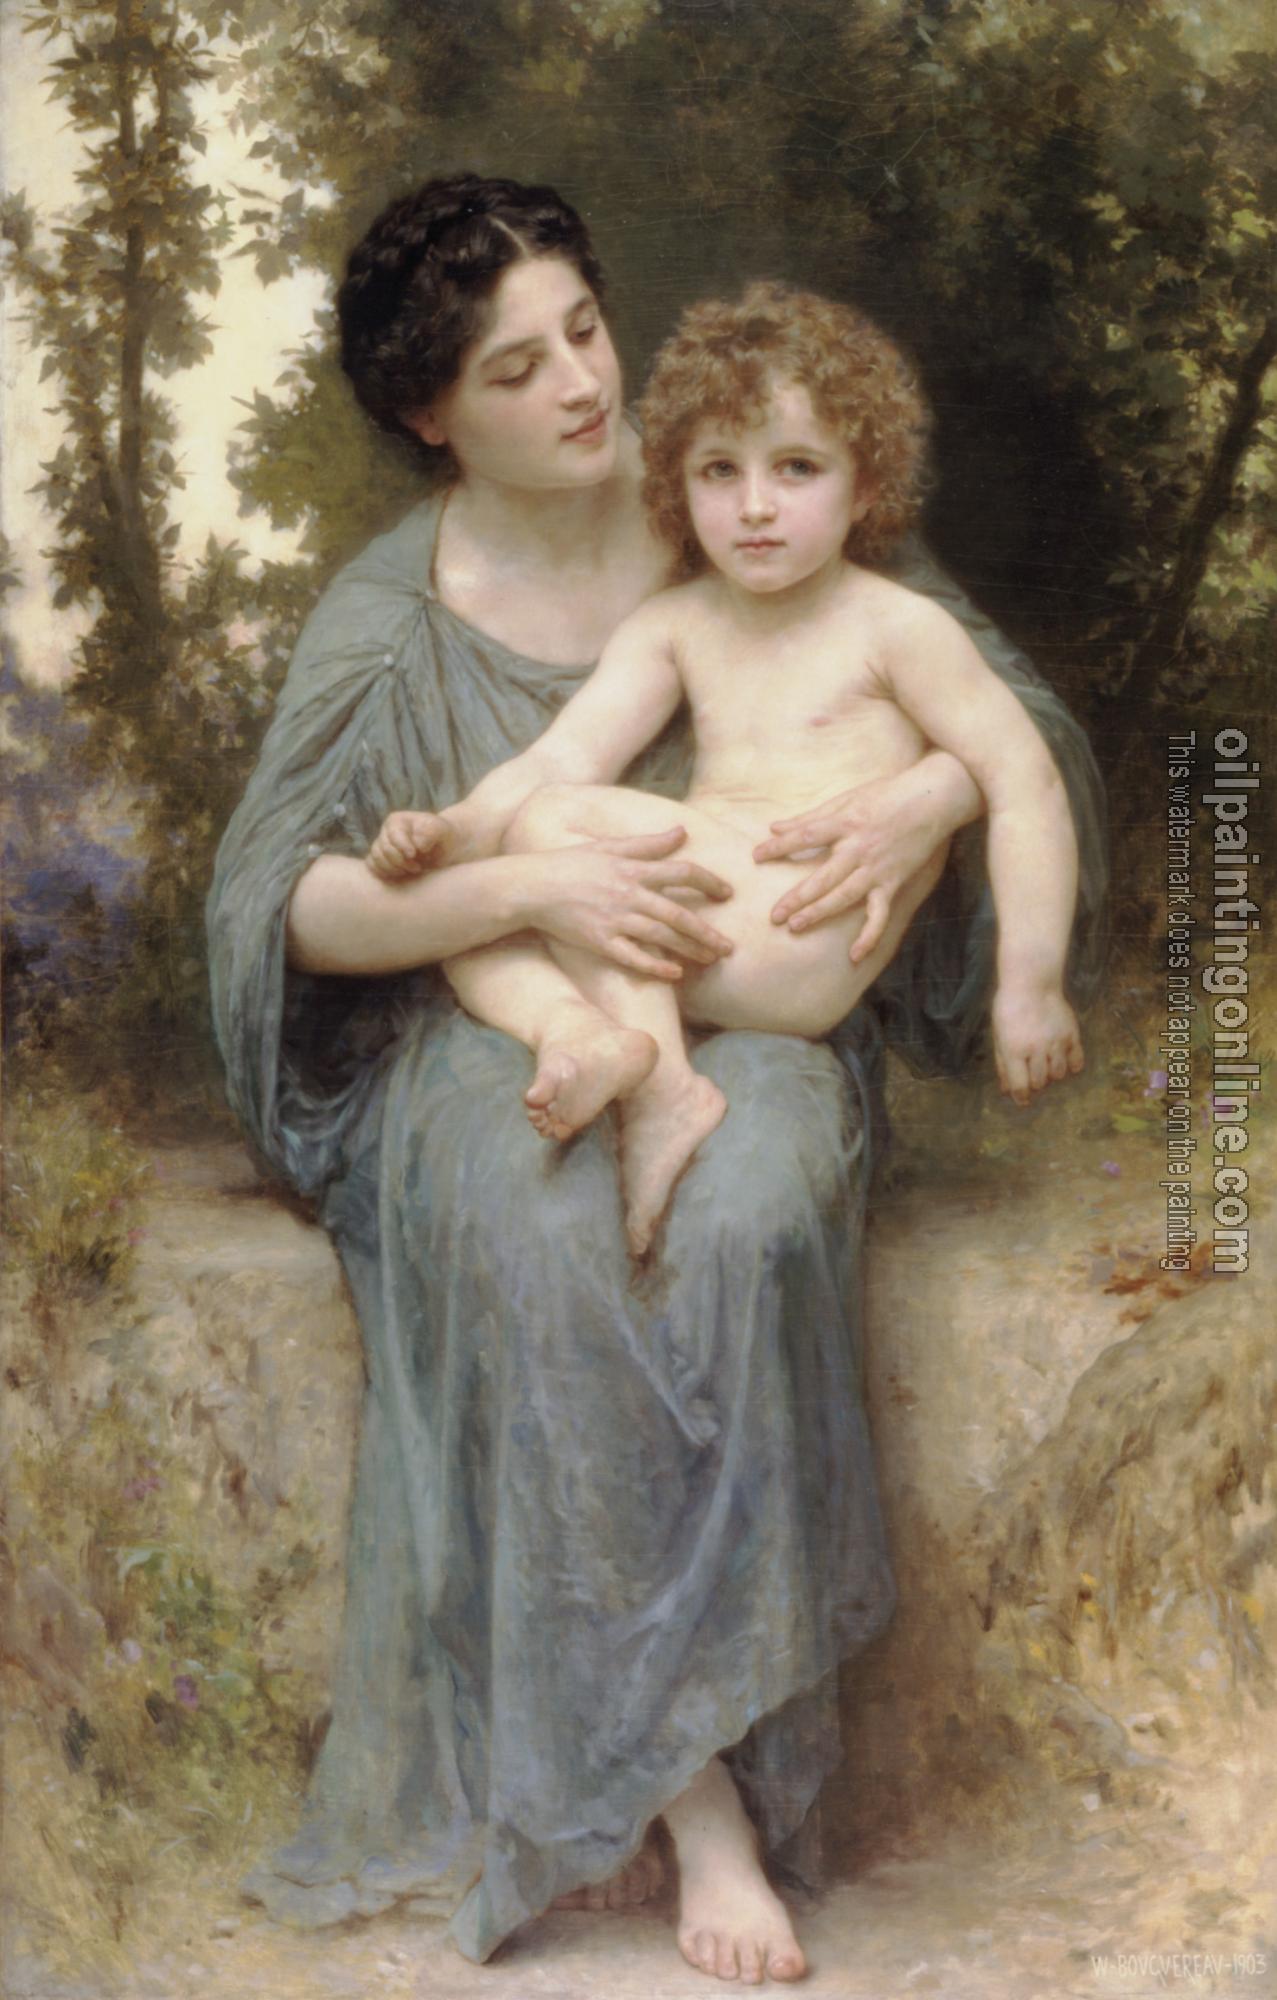 Bouguereau, William-Adolphe - Le jeune frere, Little brother